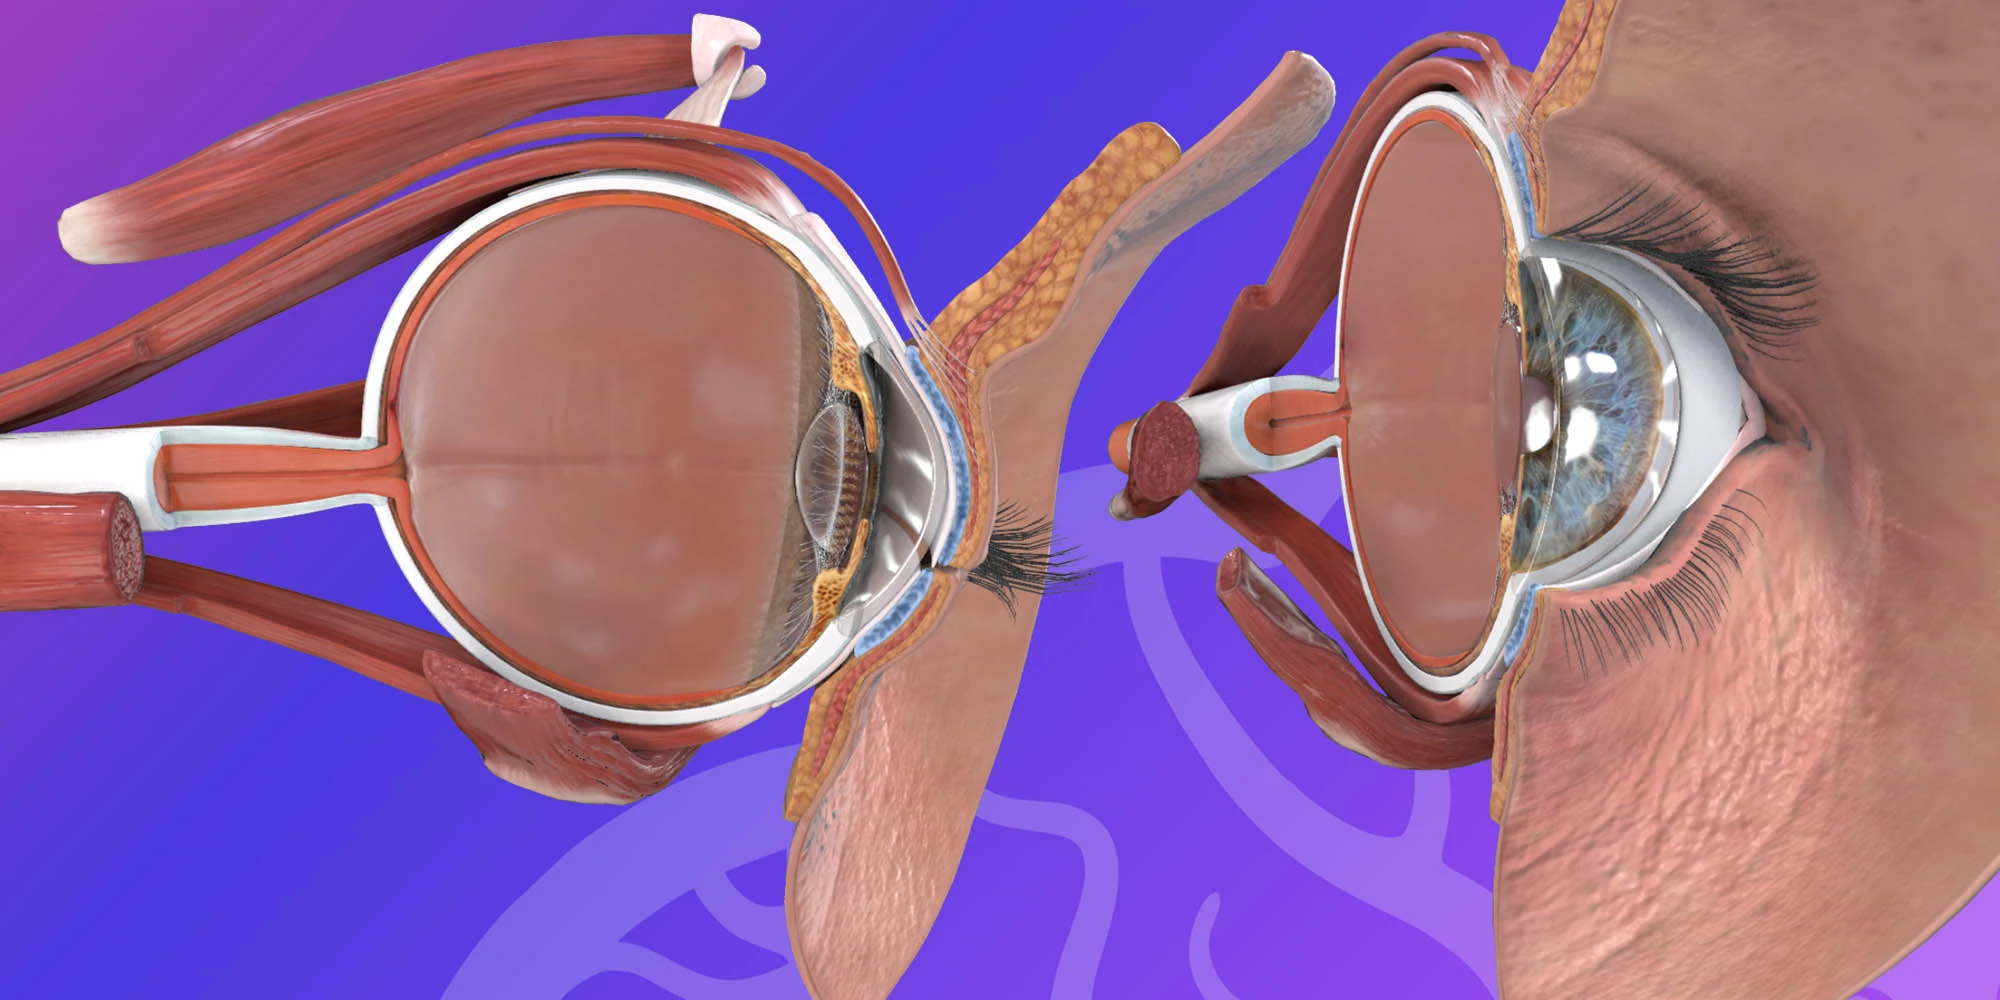 HEAD & NECK_ Eye- left sagittal section image